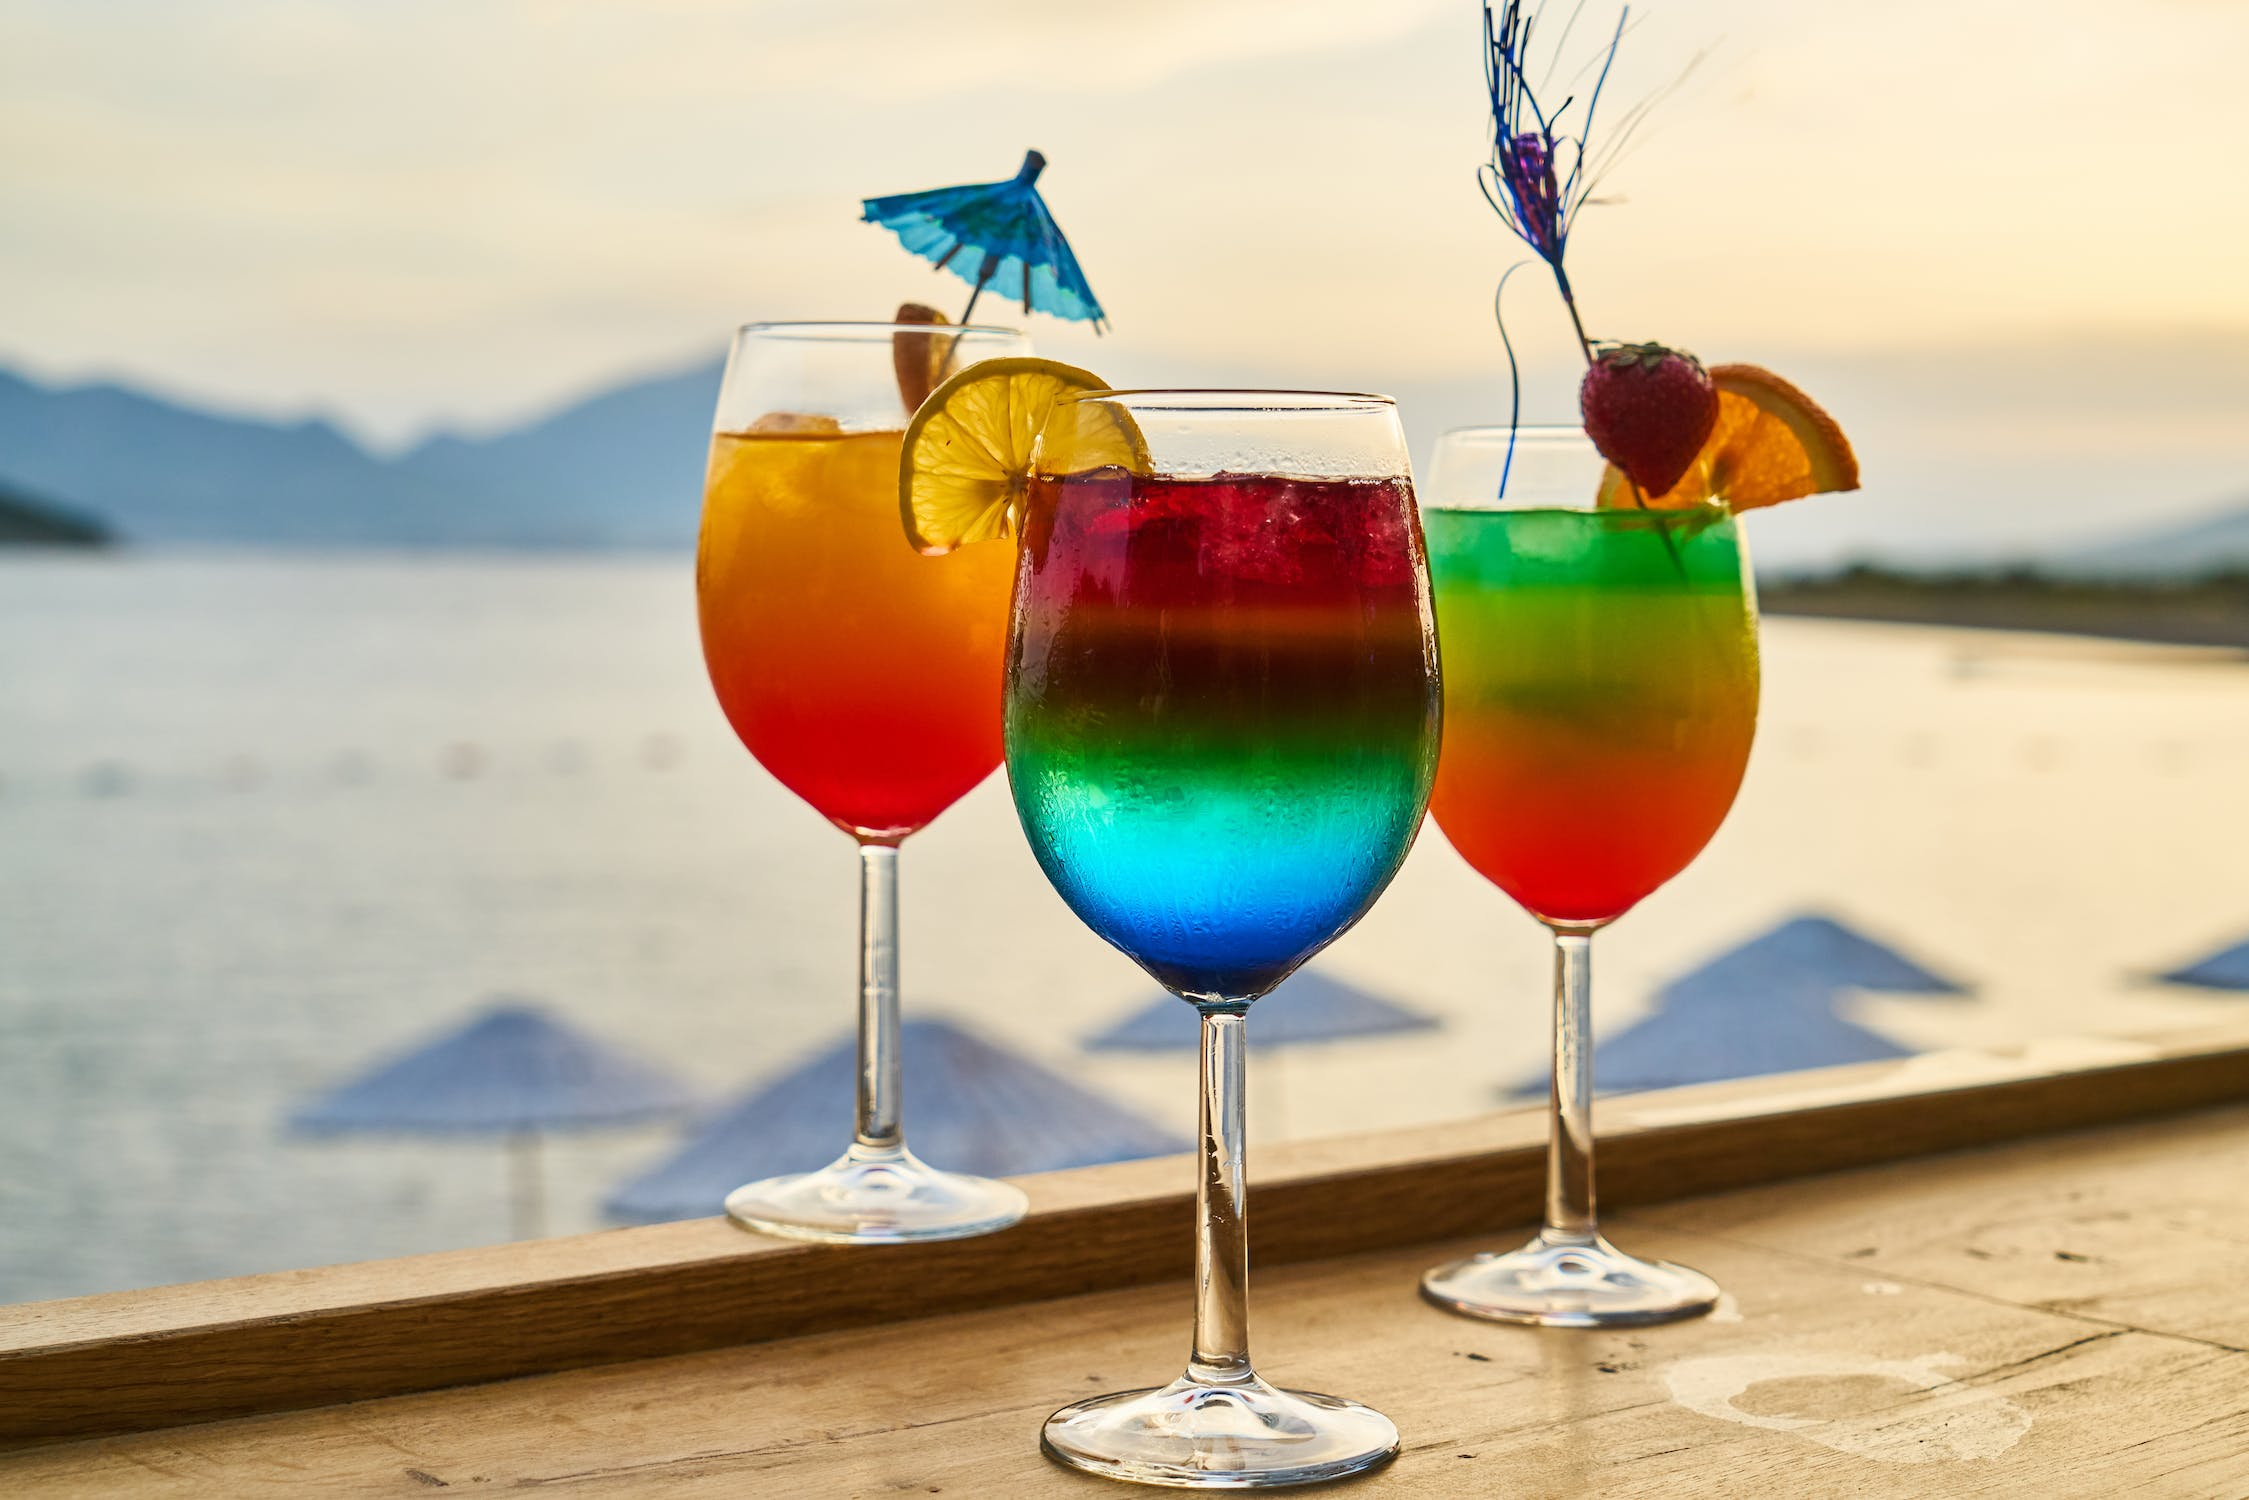 cranberry juice, chilled coupe glass, mini umbrellas